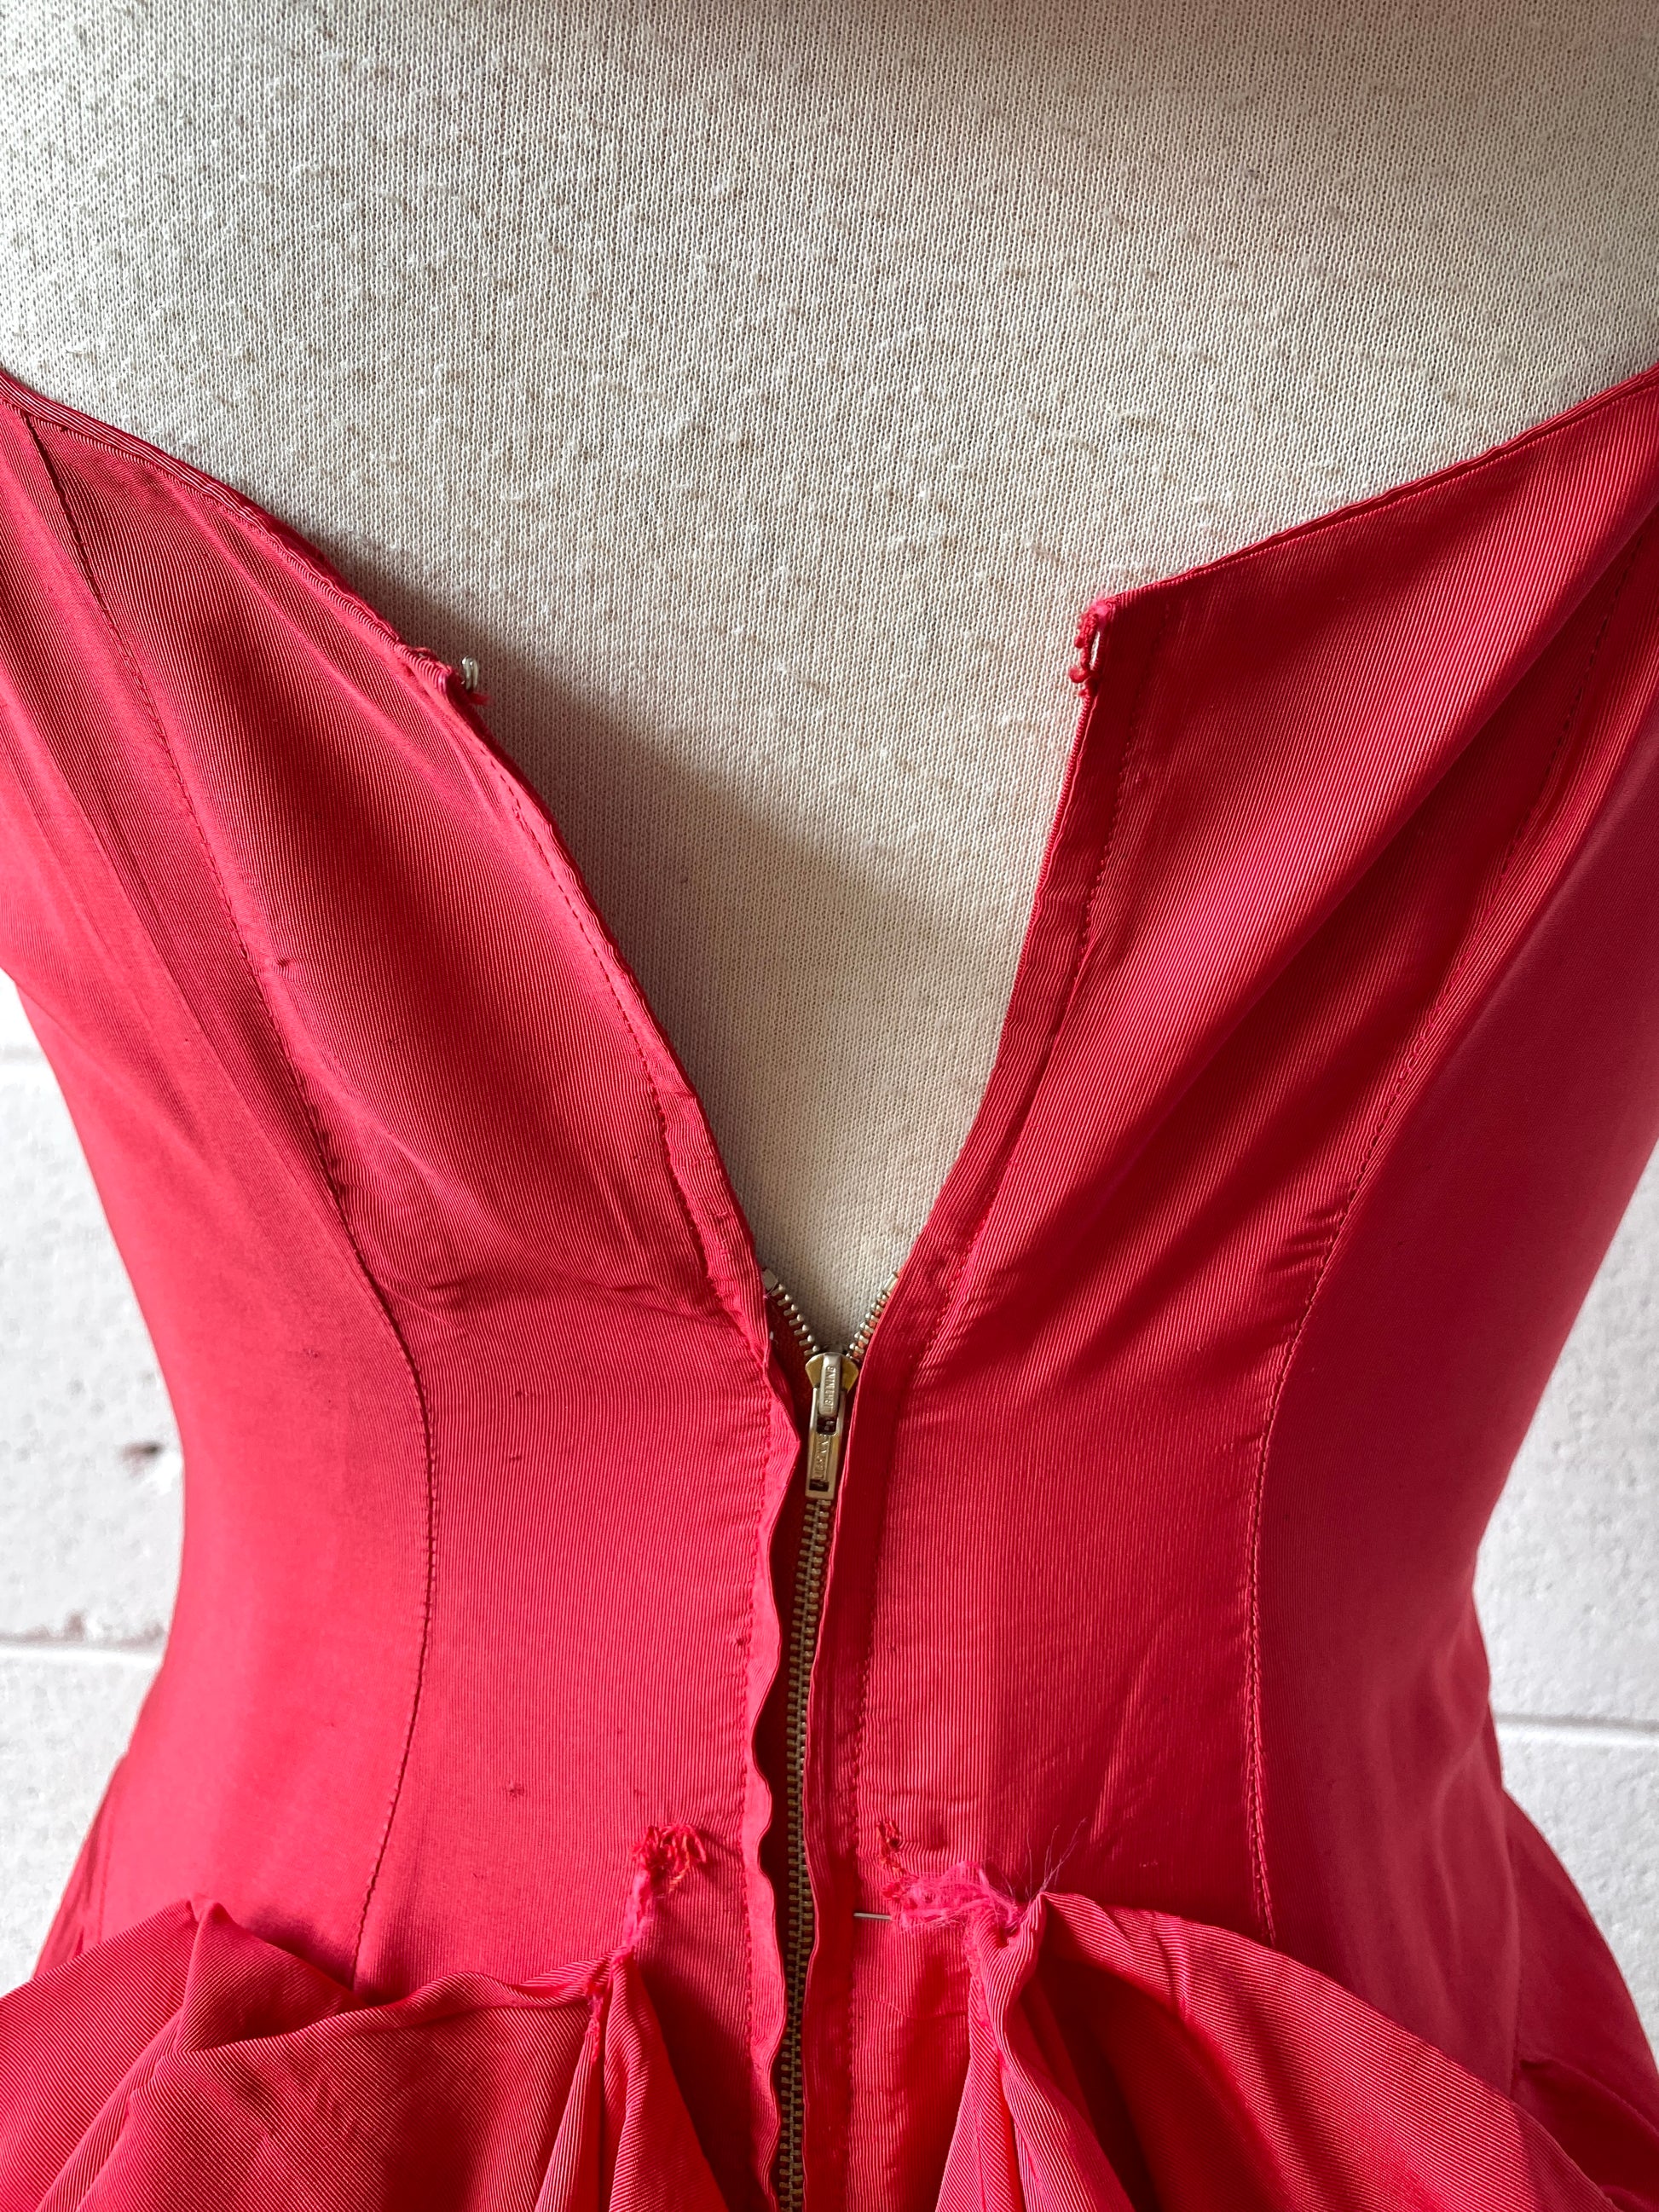 Vintage 1940s Pink Taffeta Gown, B32"